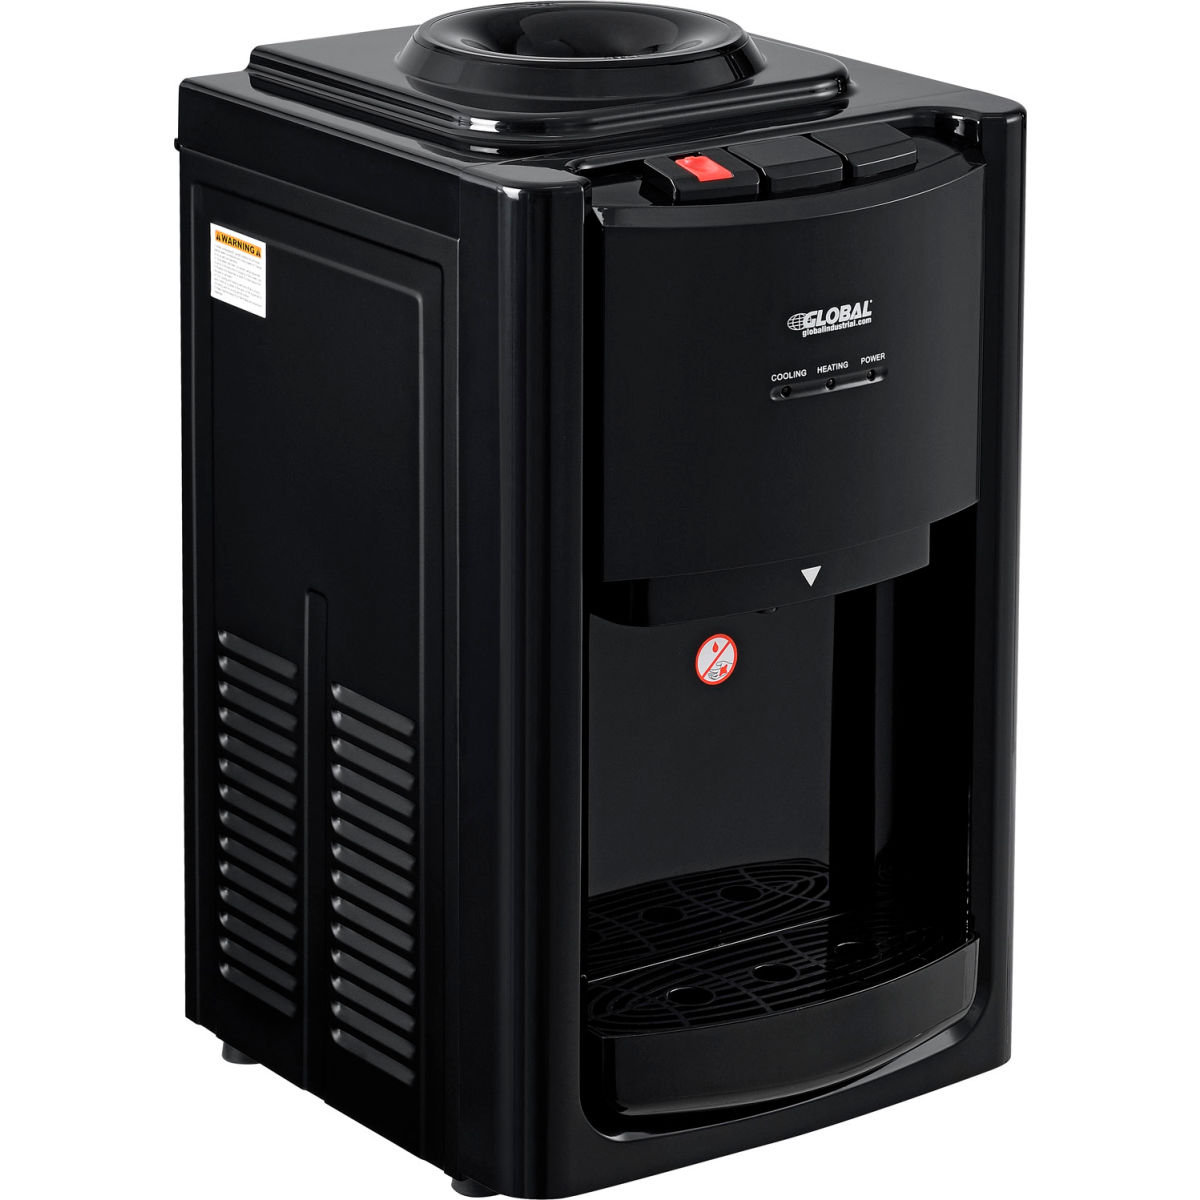 670438 Global Industrial Tri-Temp Countertop Water Dispenser, Black -  TCL Household Appliances